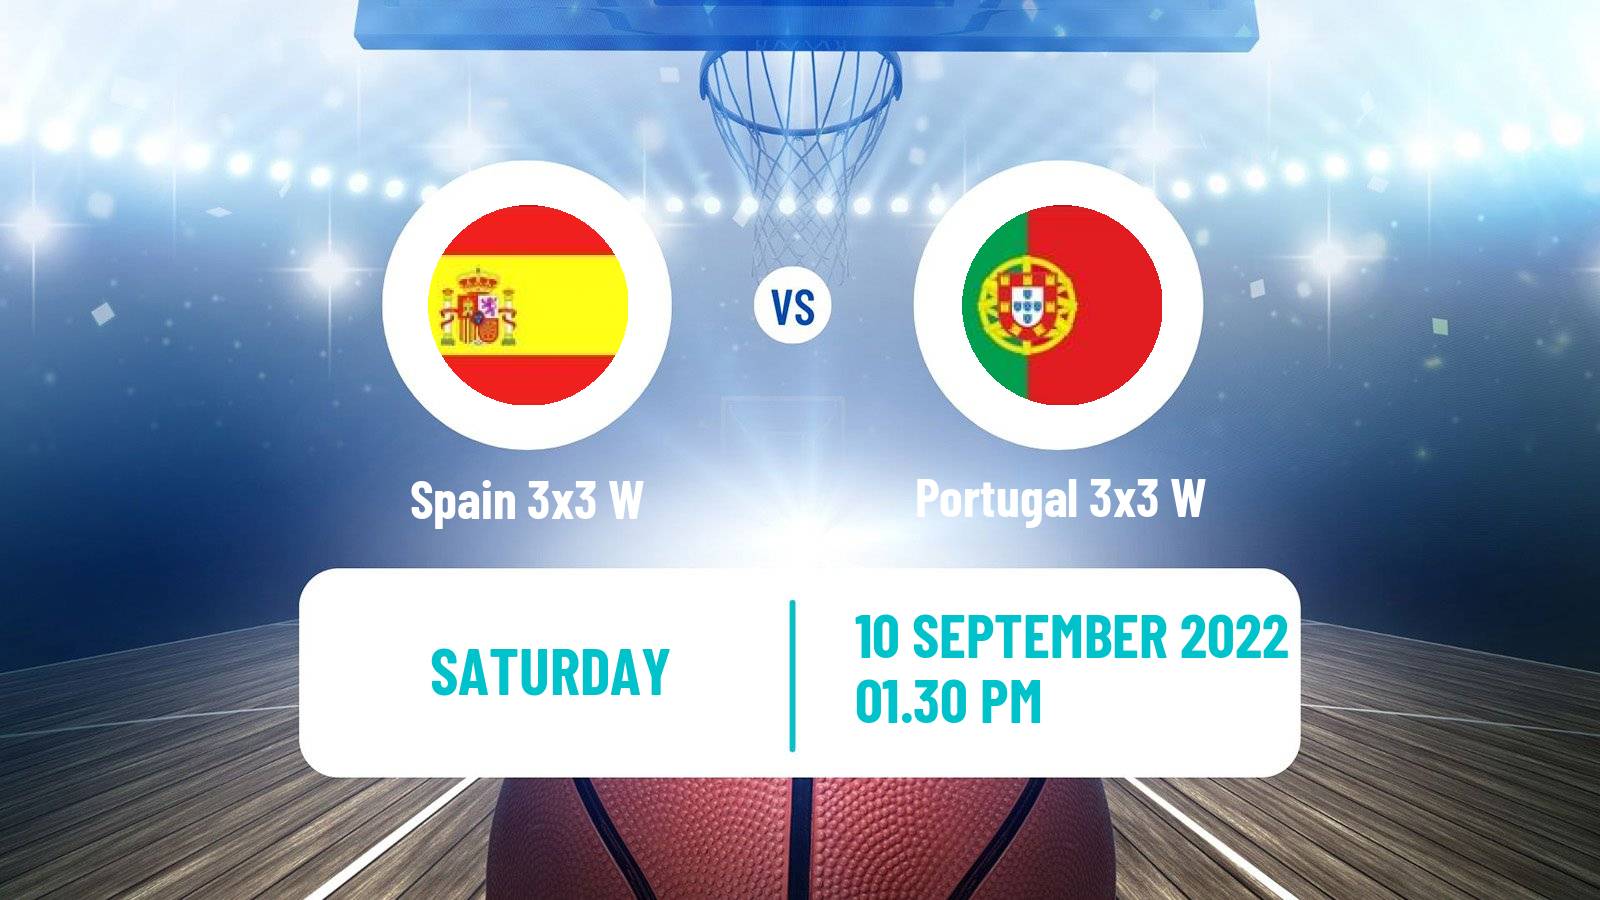 Basketball Europe Cup Basketball 3x3 Women Spain 3x3 W - Portugal 3x3 W